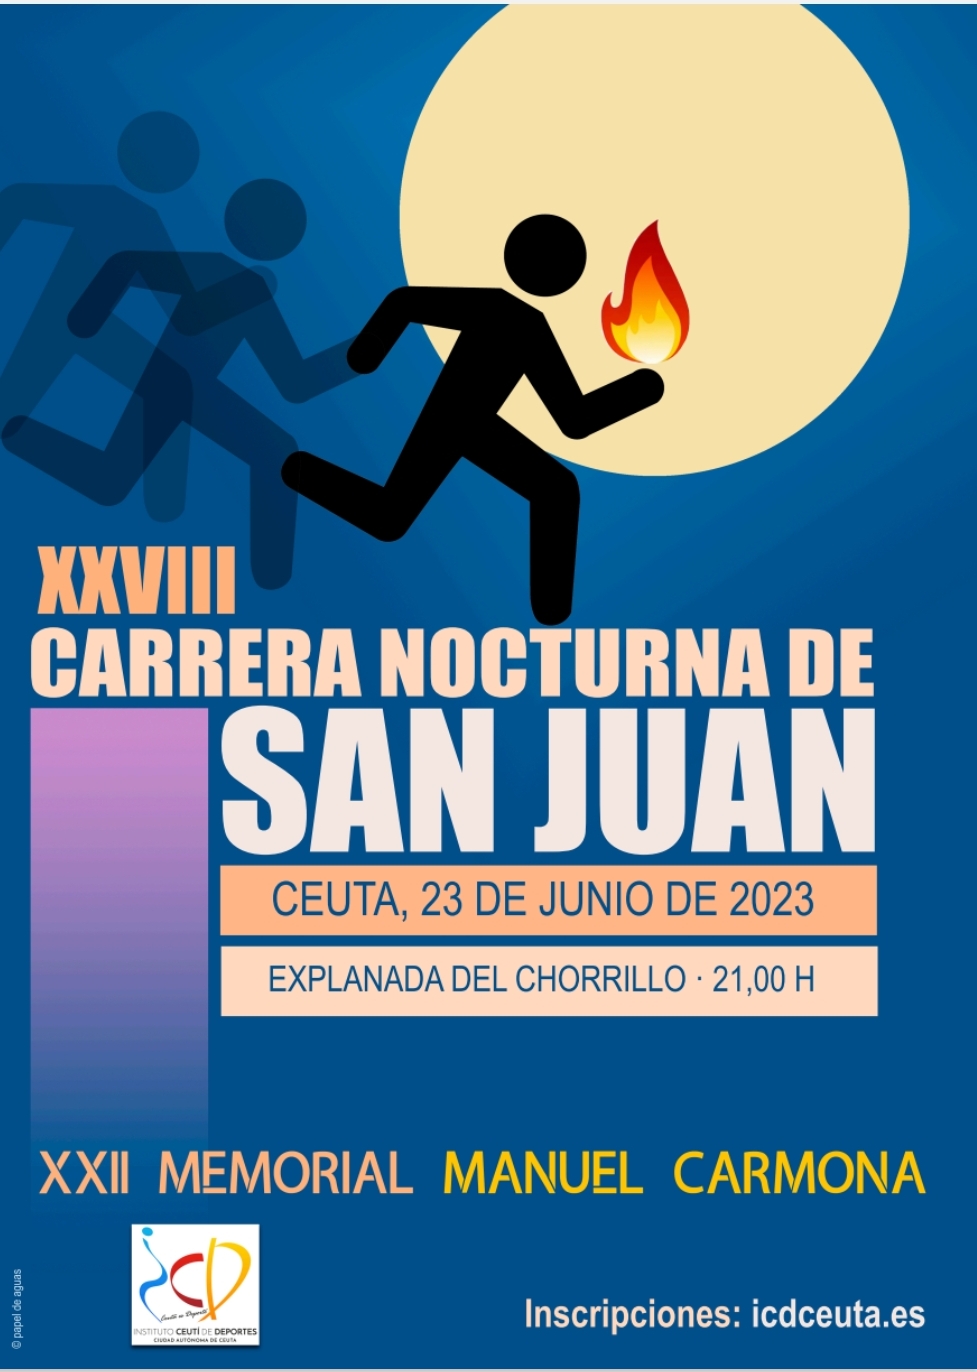 XXVIII CARRERA NOCTURNA DE SAN JUAN, XXII MEMORIAL MANUEL CARMONA